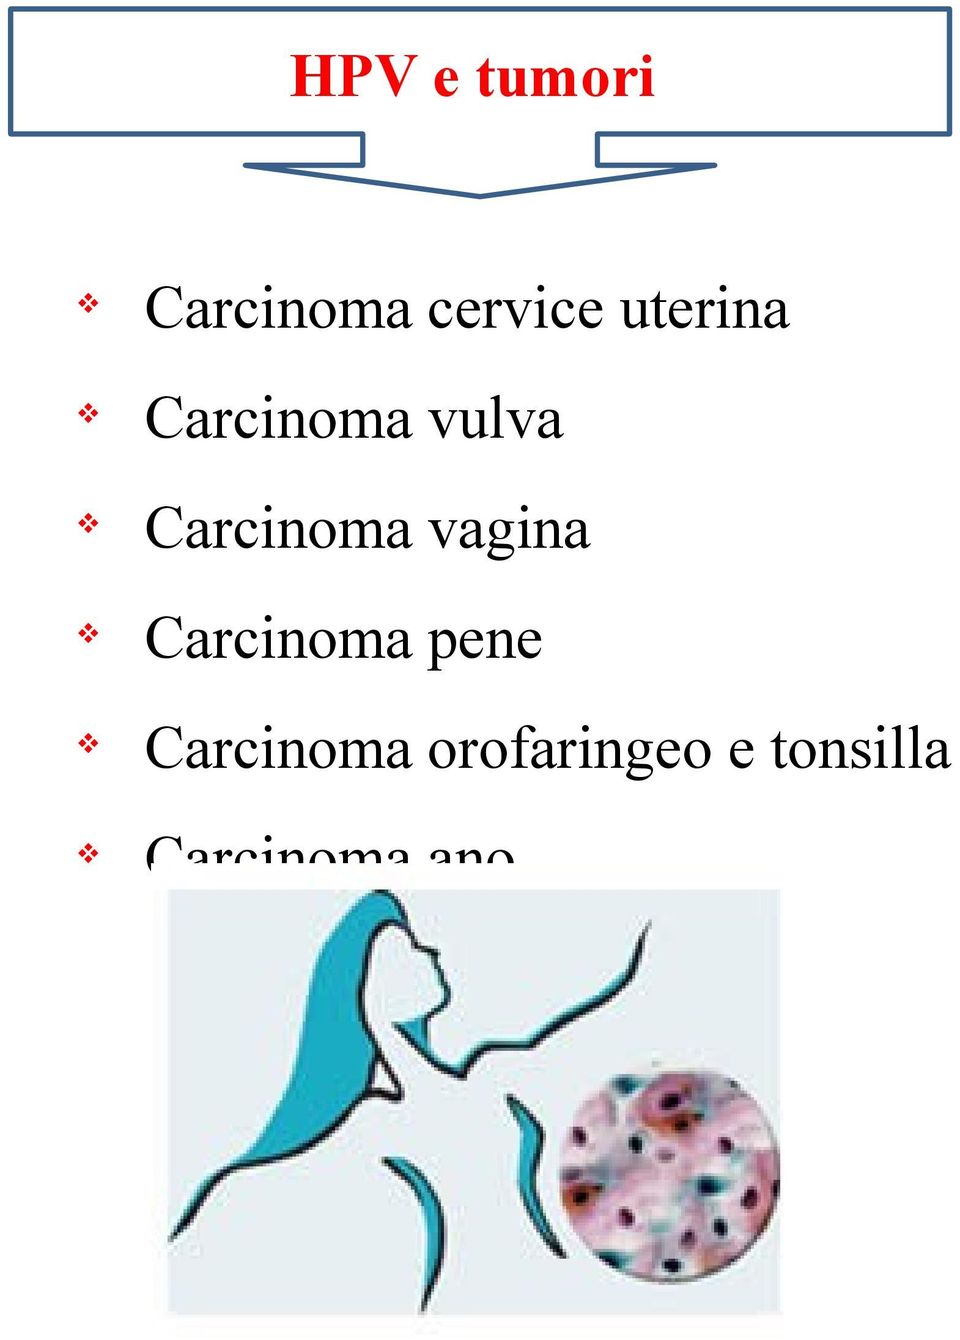 agina Carcinoma pene Carcinoma